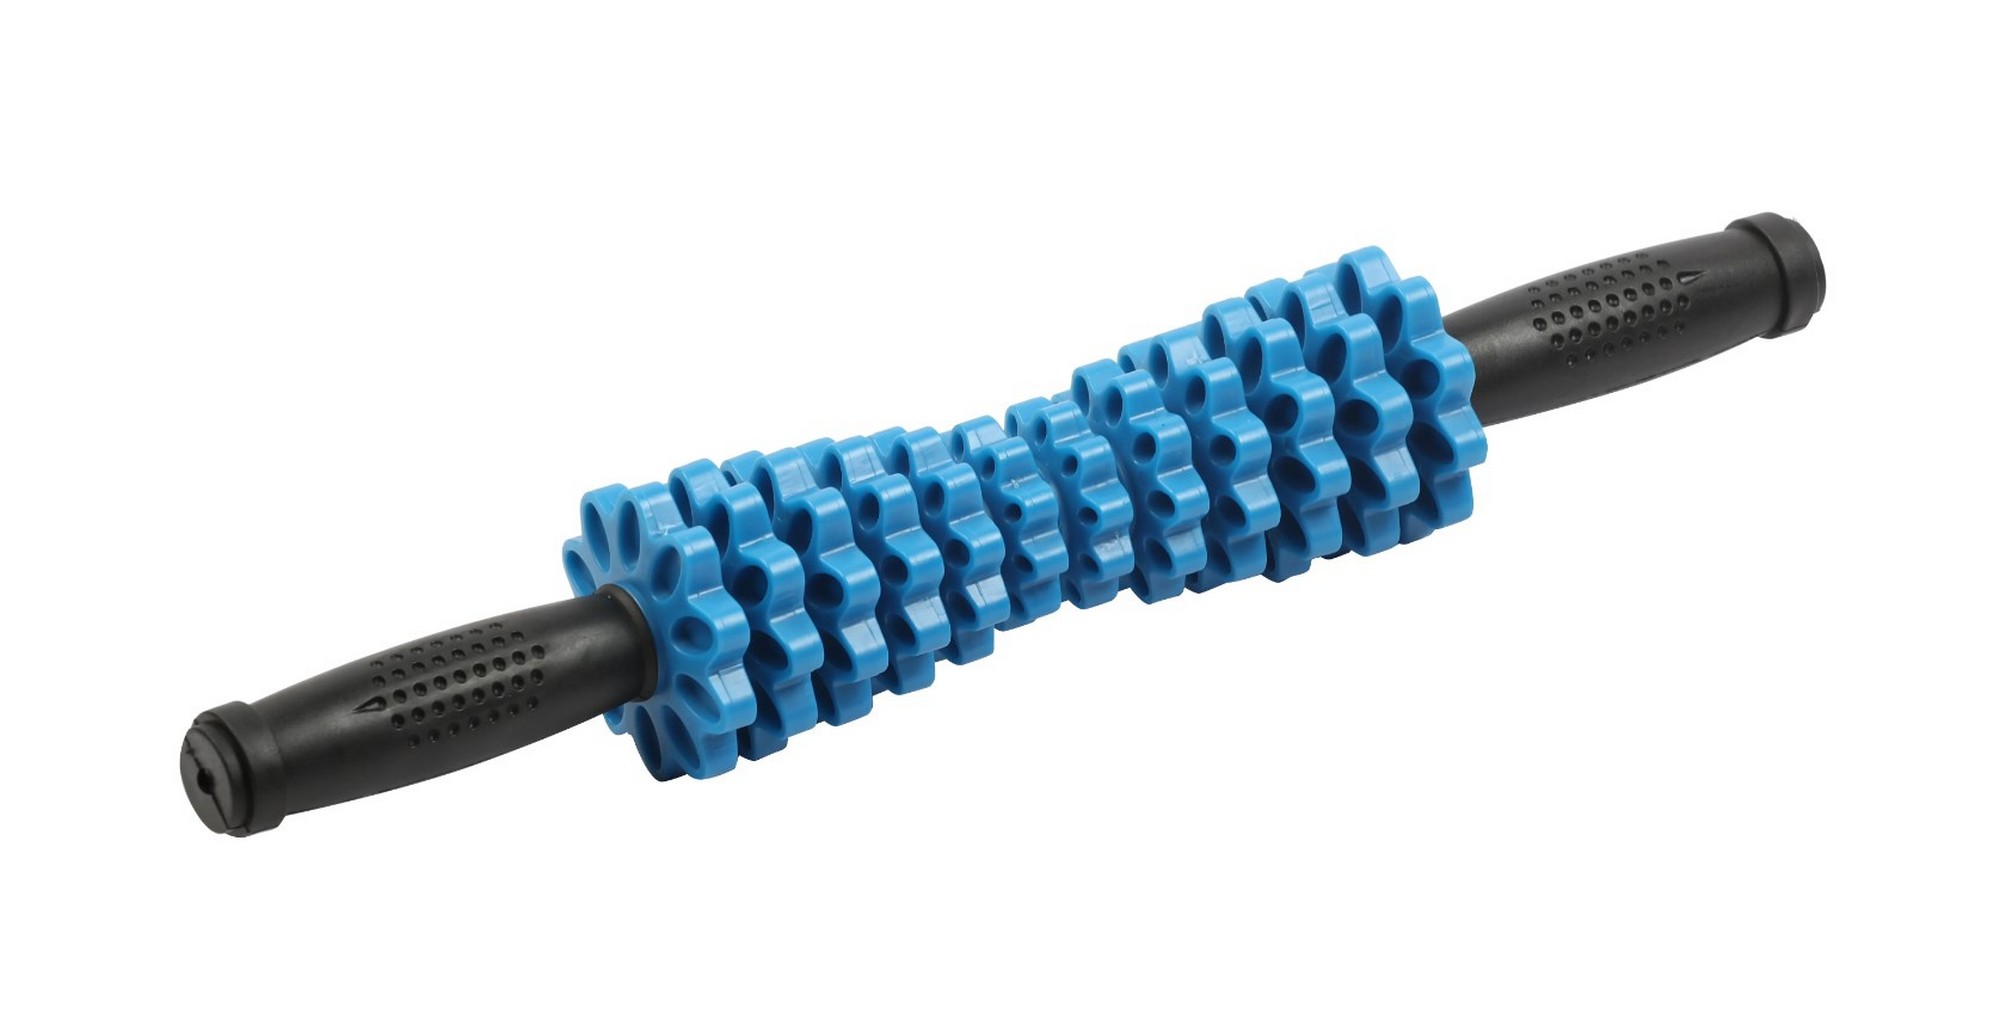    PRCTZ Massge Therapy Roller Stick, 42  PR3820